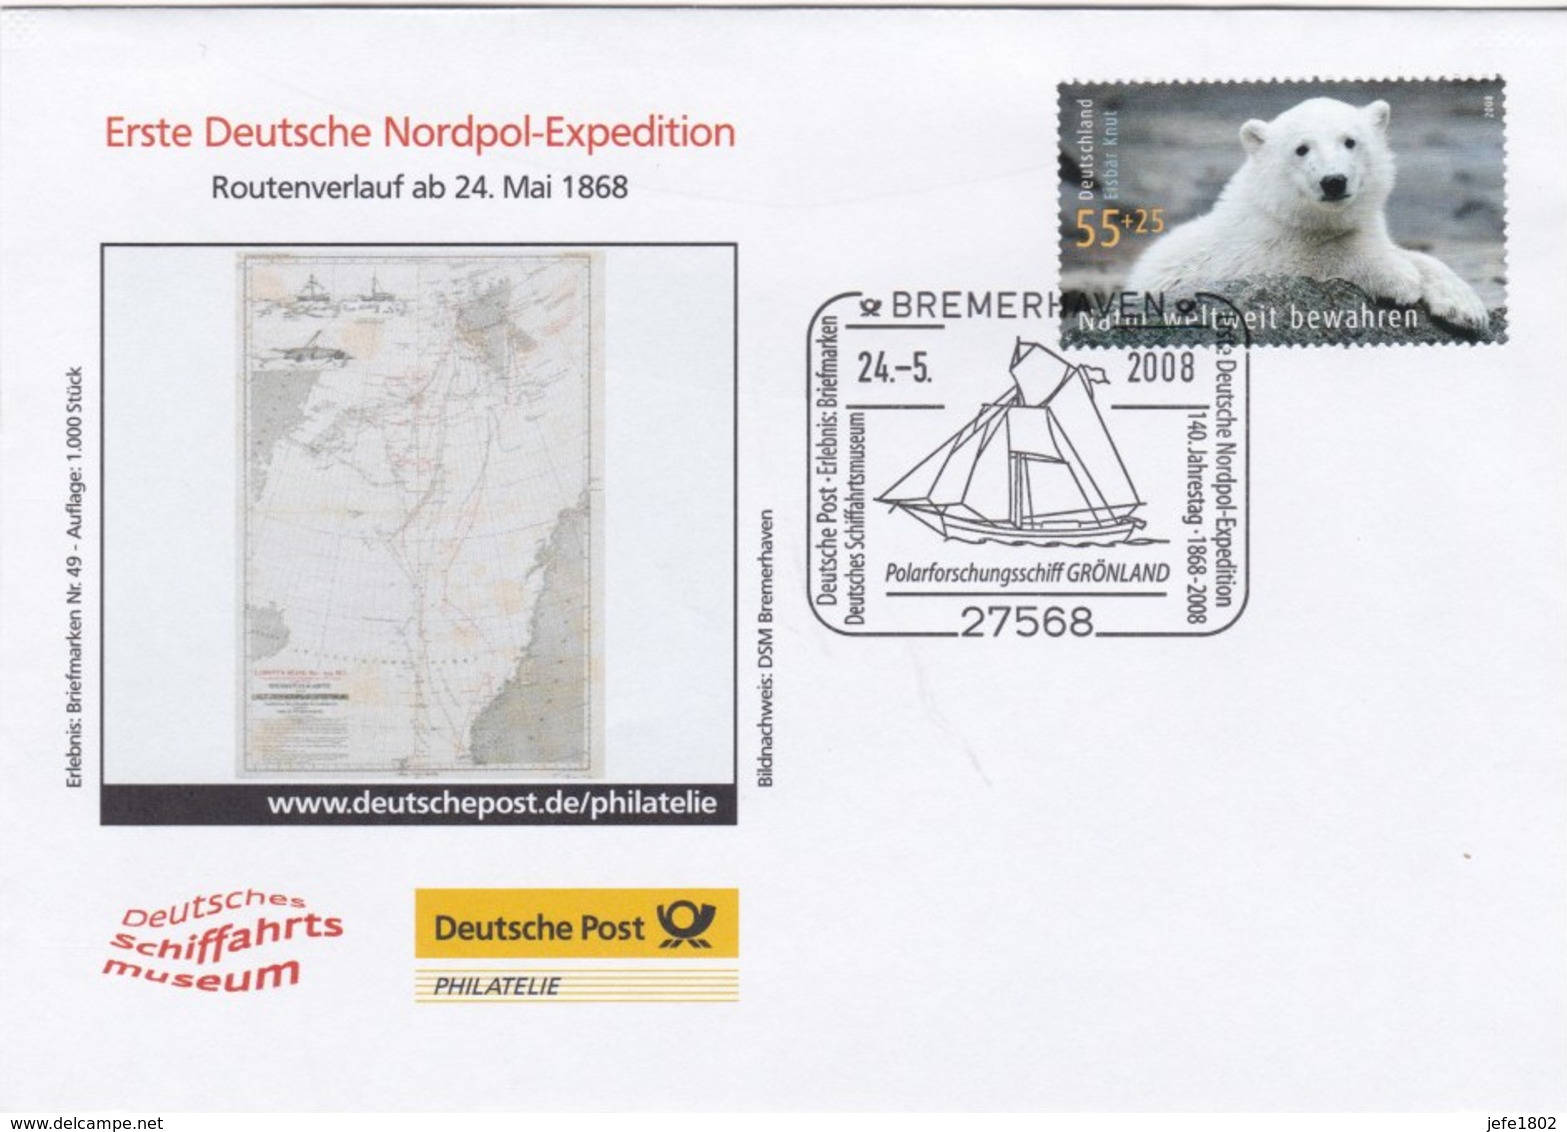 Erste Deutsche Nordpol-Expedition - Forschungsstationen & Arctic Driftstationen